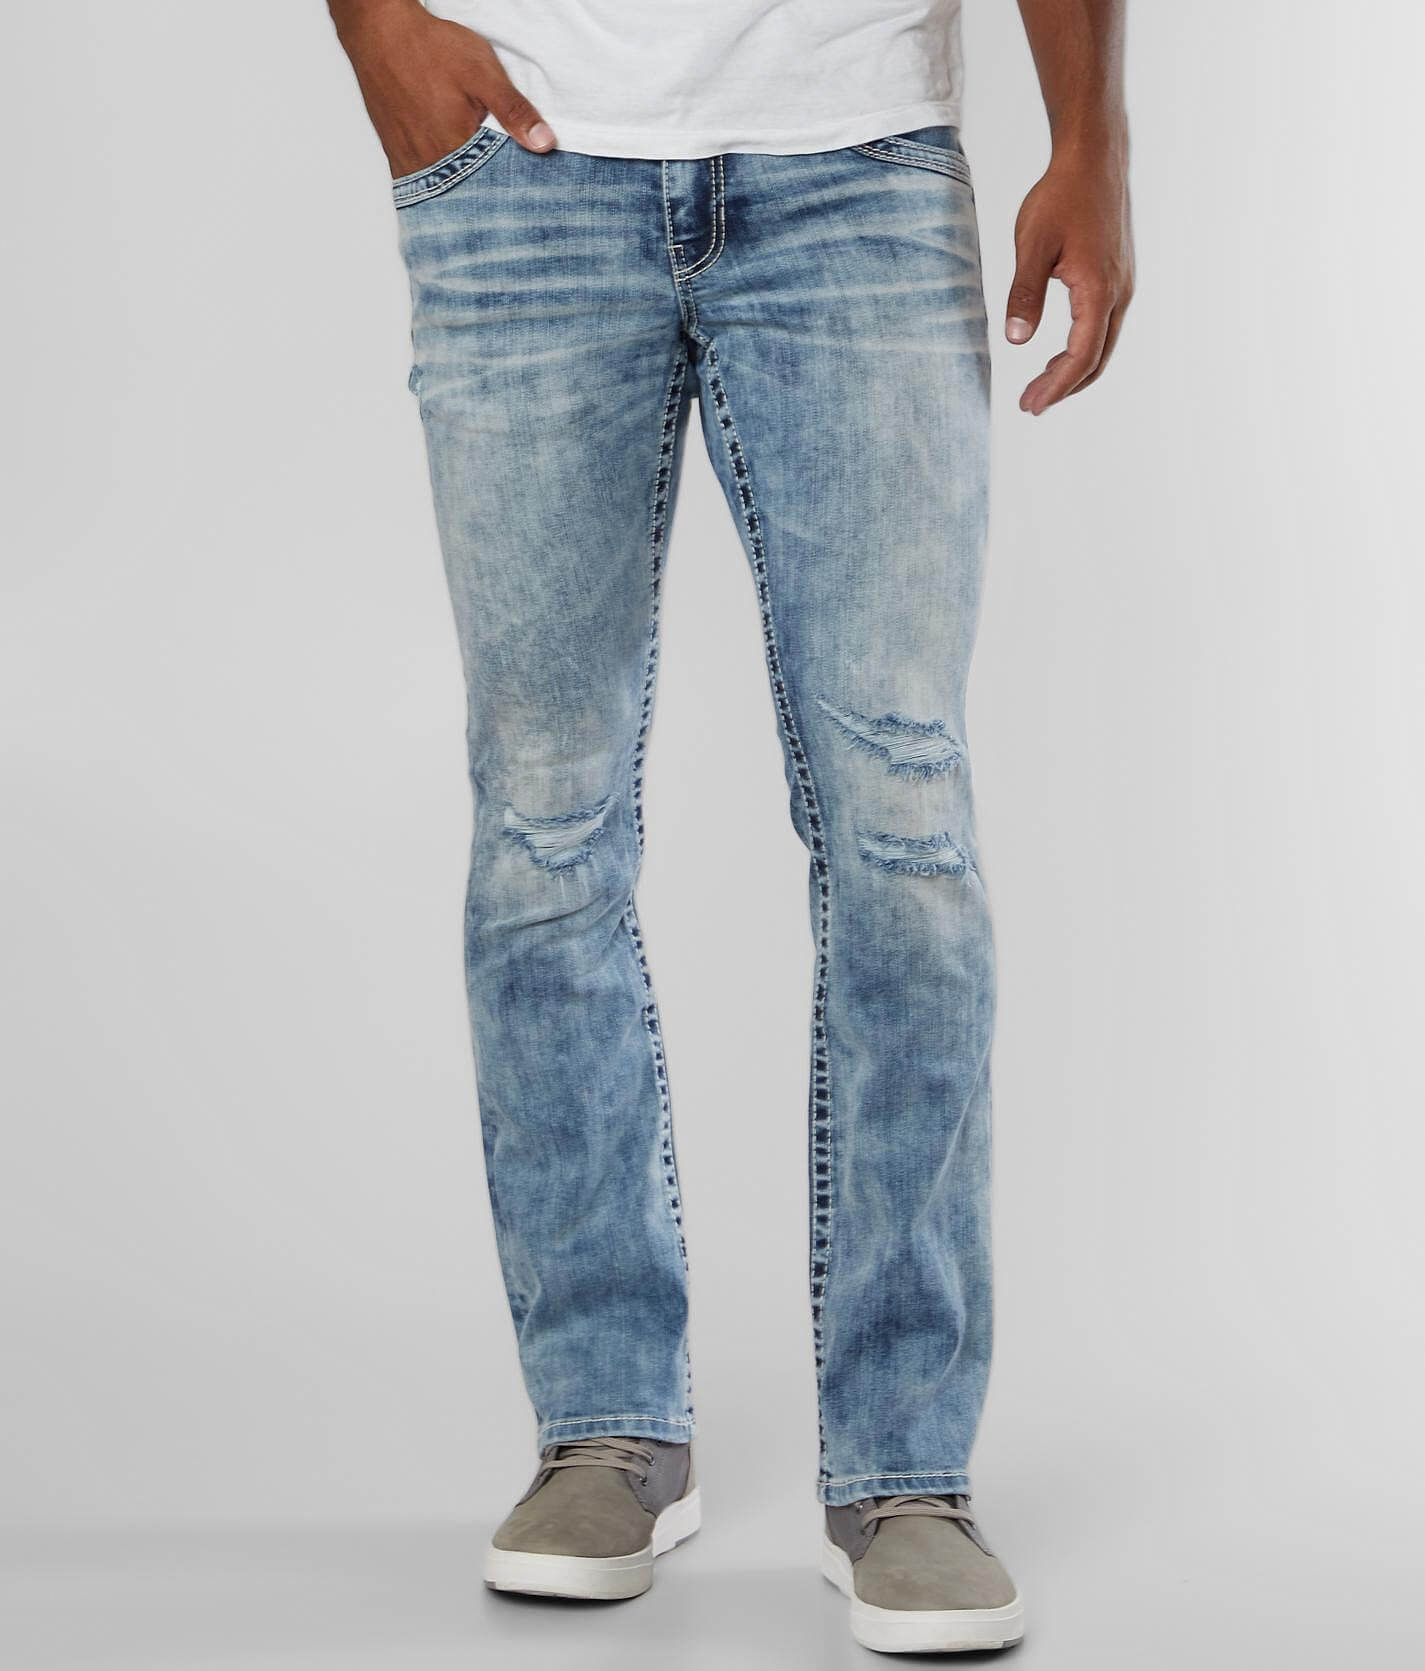 buckle jeans cheap